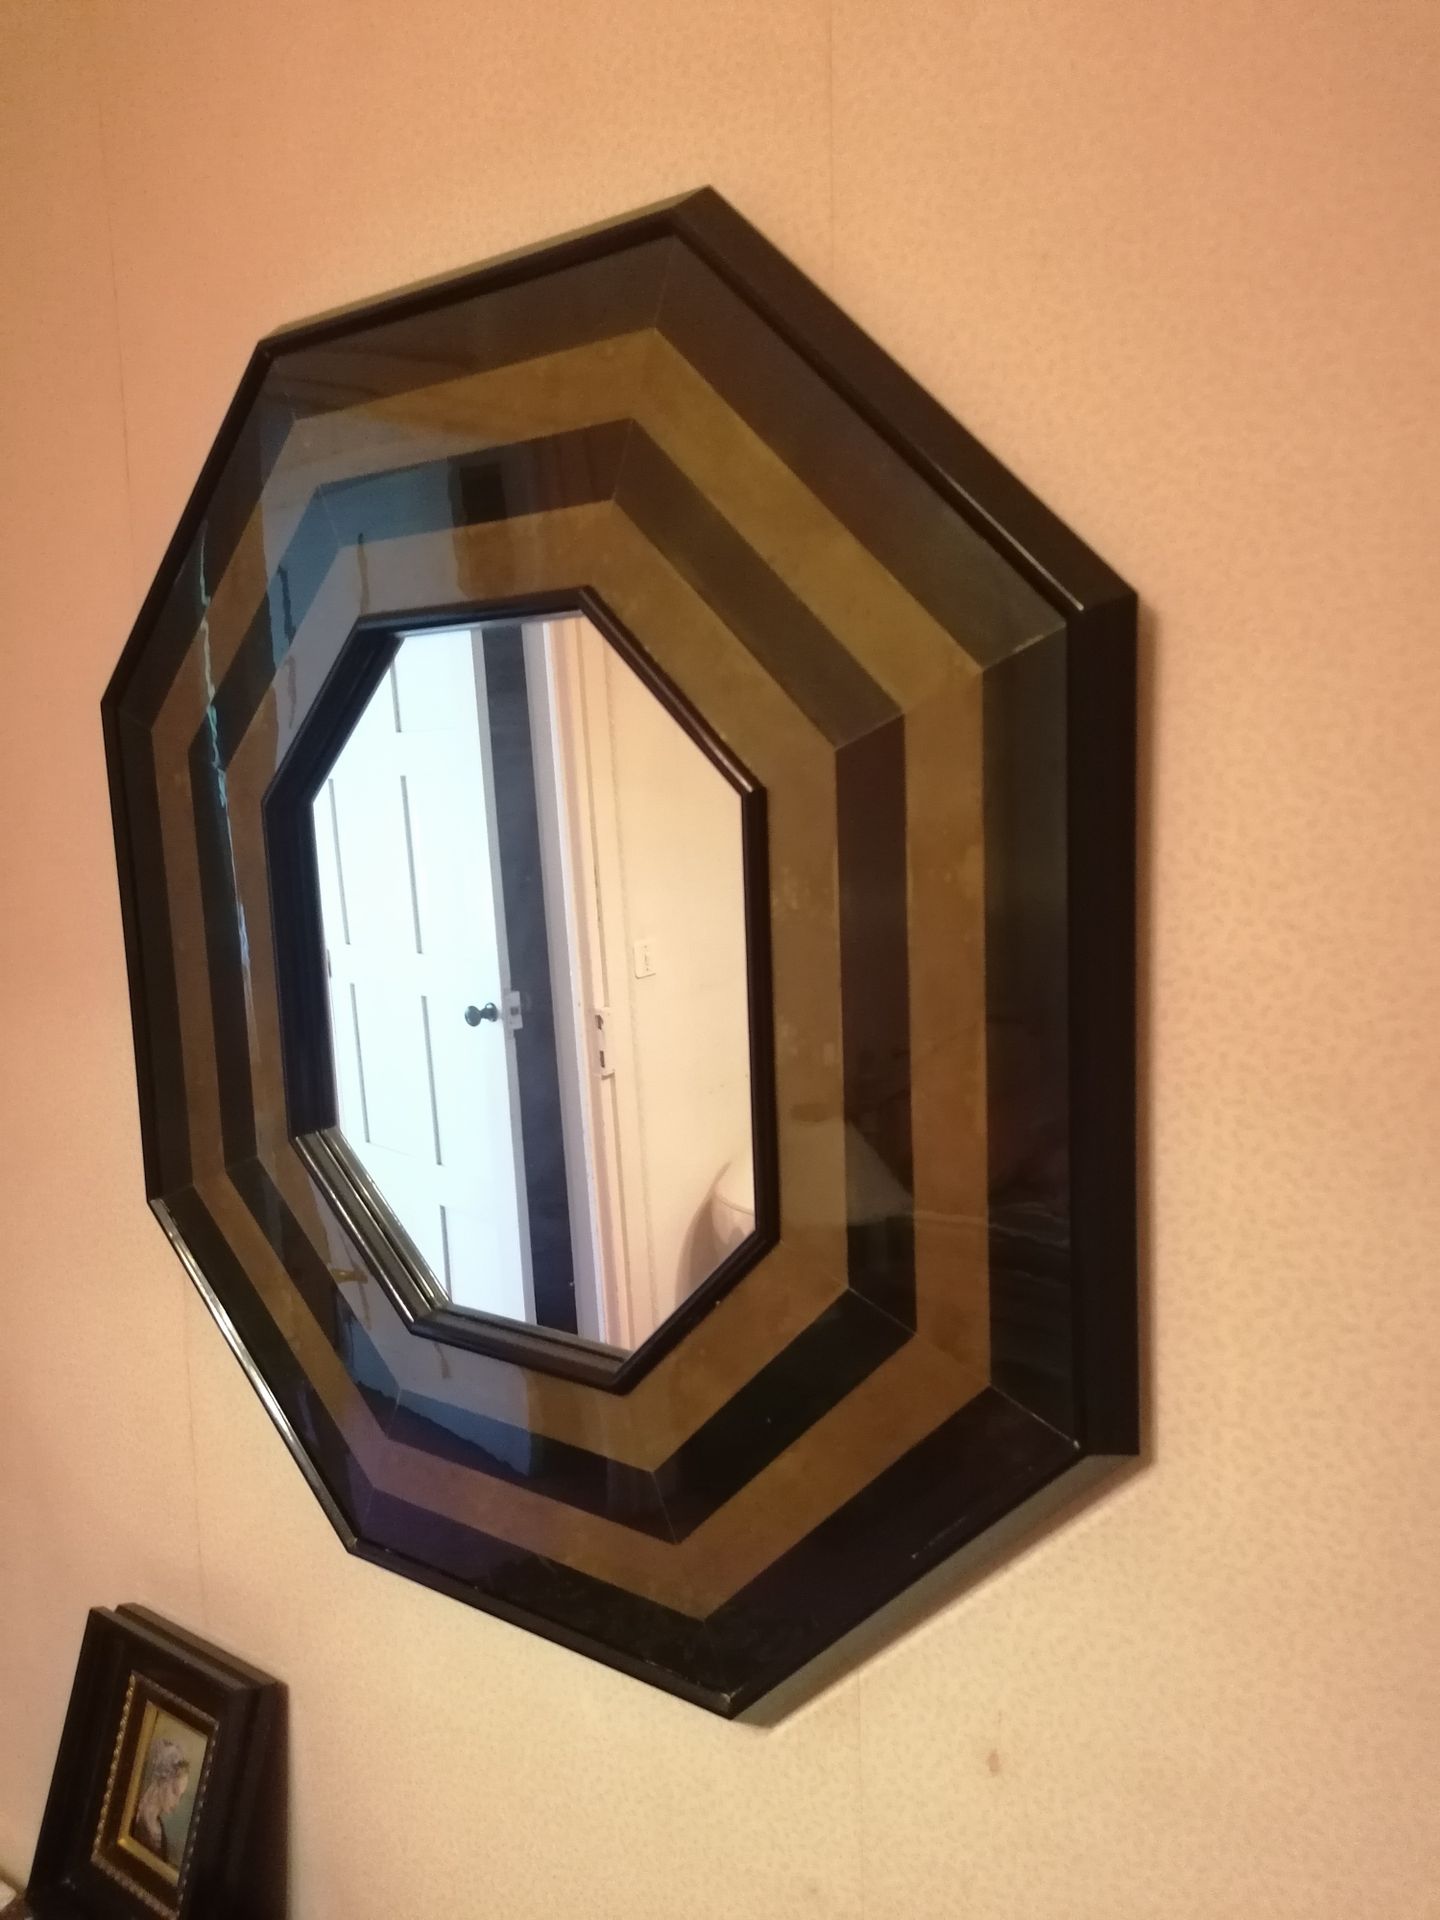 Null 
八角形的镜子

尺寸：69x74厘米